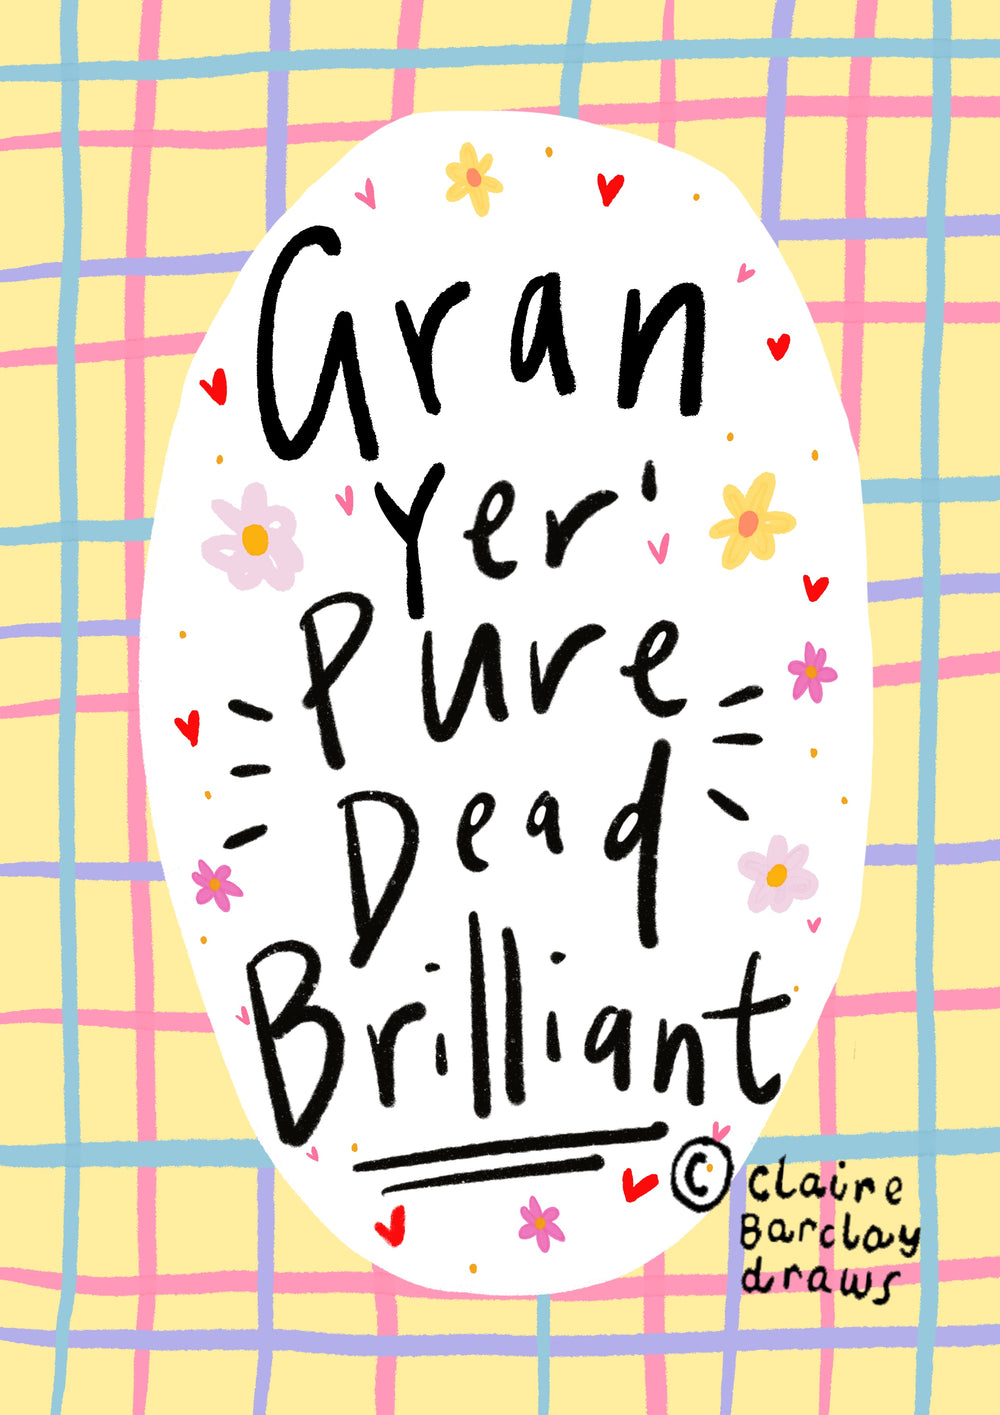 Gran, Yer' Pure Dead Brilliant! Greetings Card